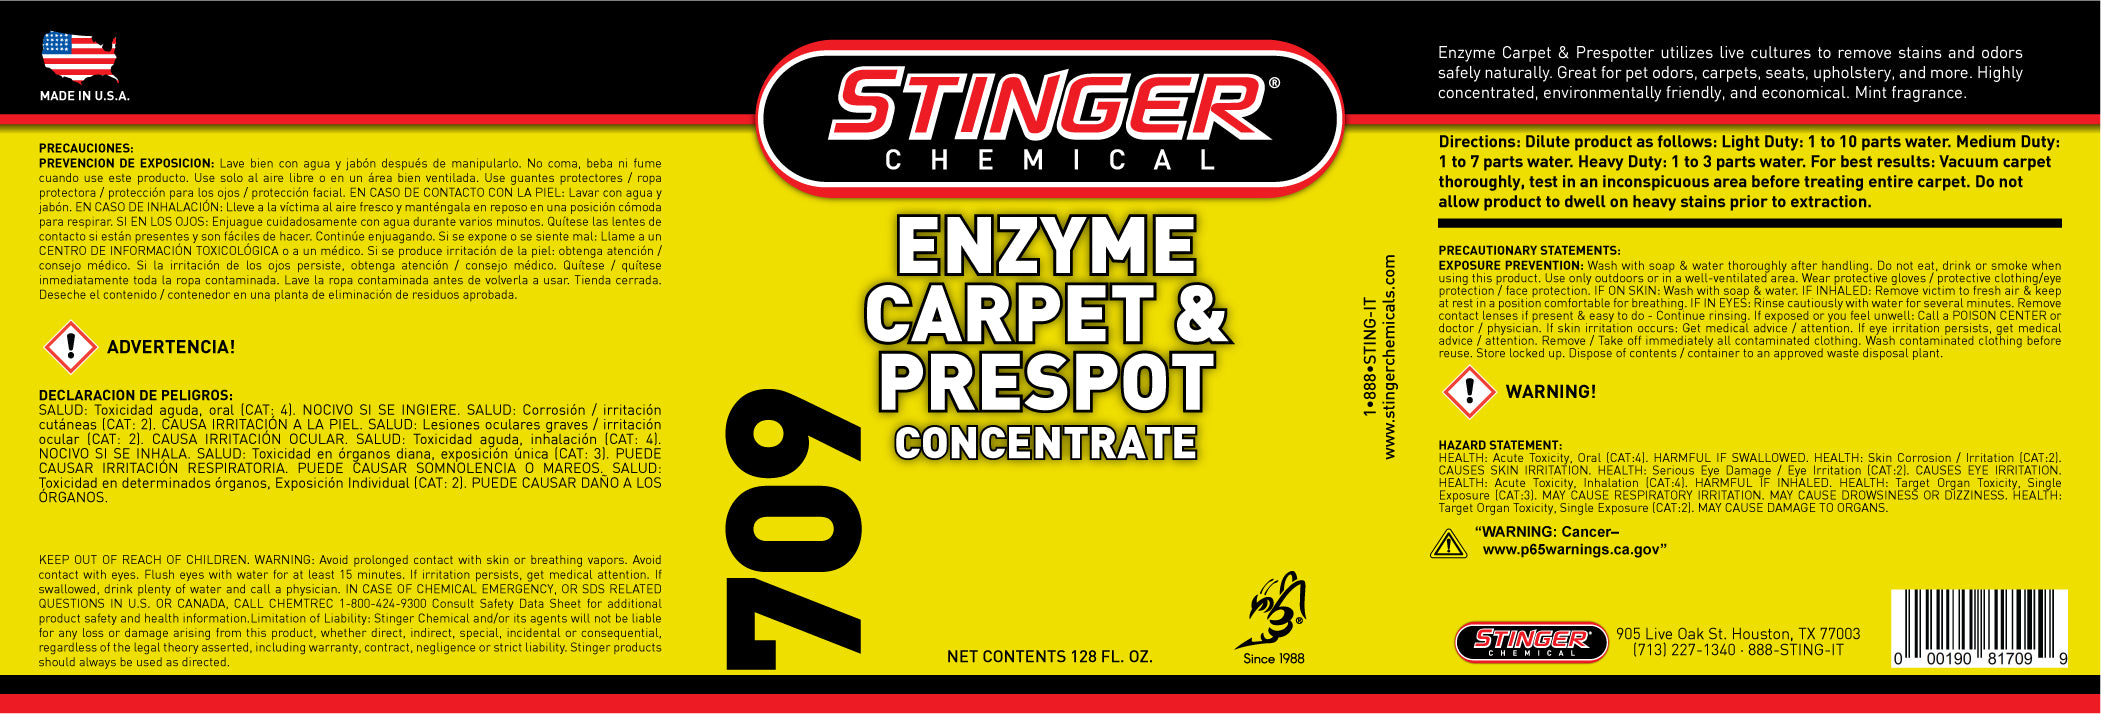 stinger-709-label